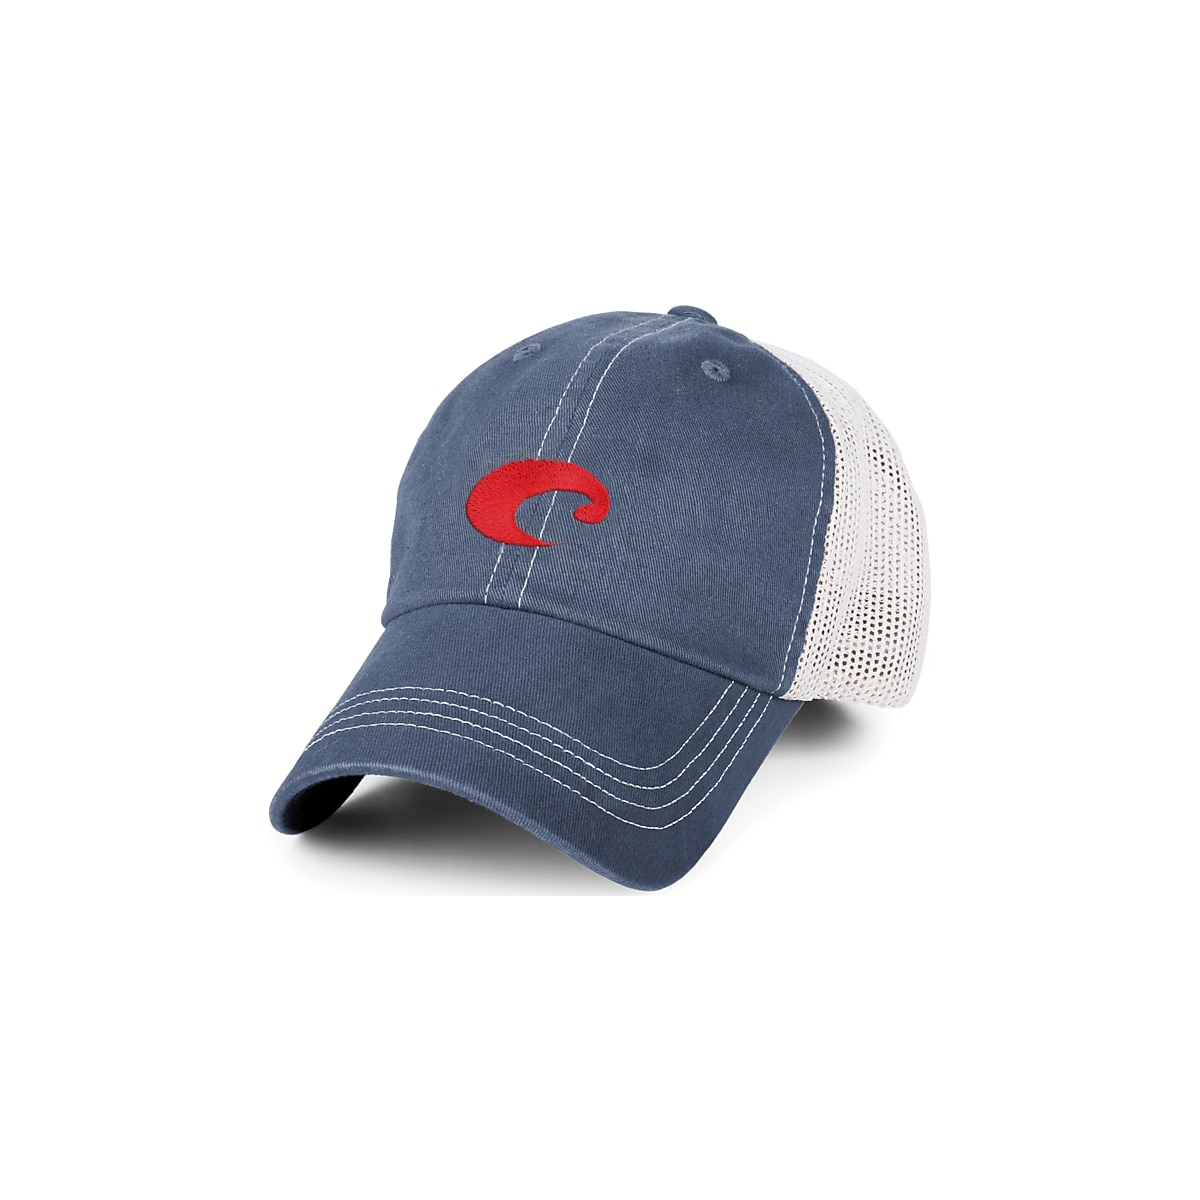 Costa Del Mar Blue White Mesh Trucker Hat Snapback Cap One Size